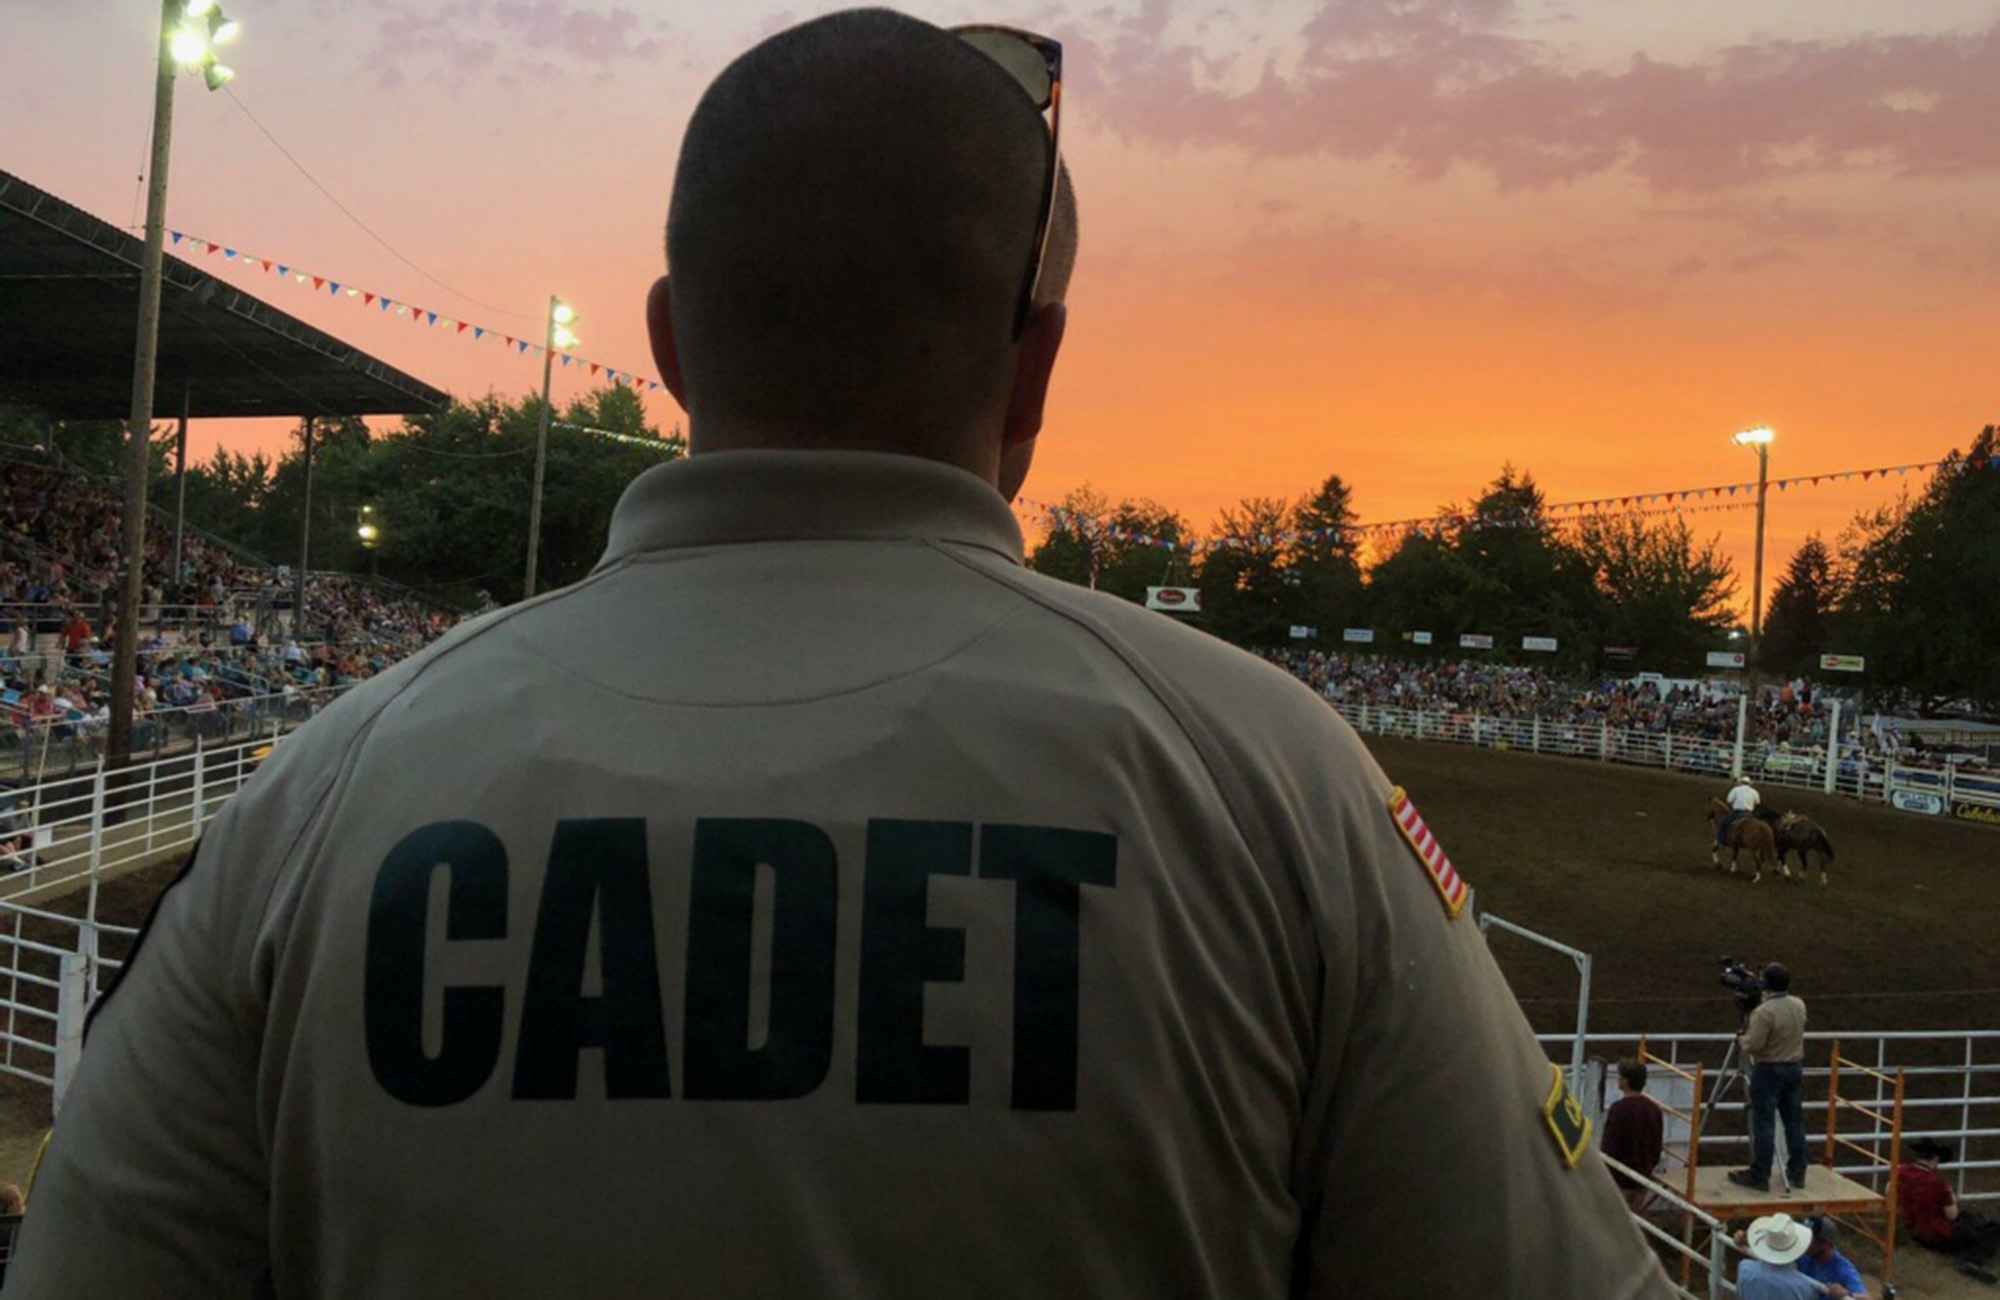 cadet at rodeo